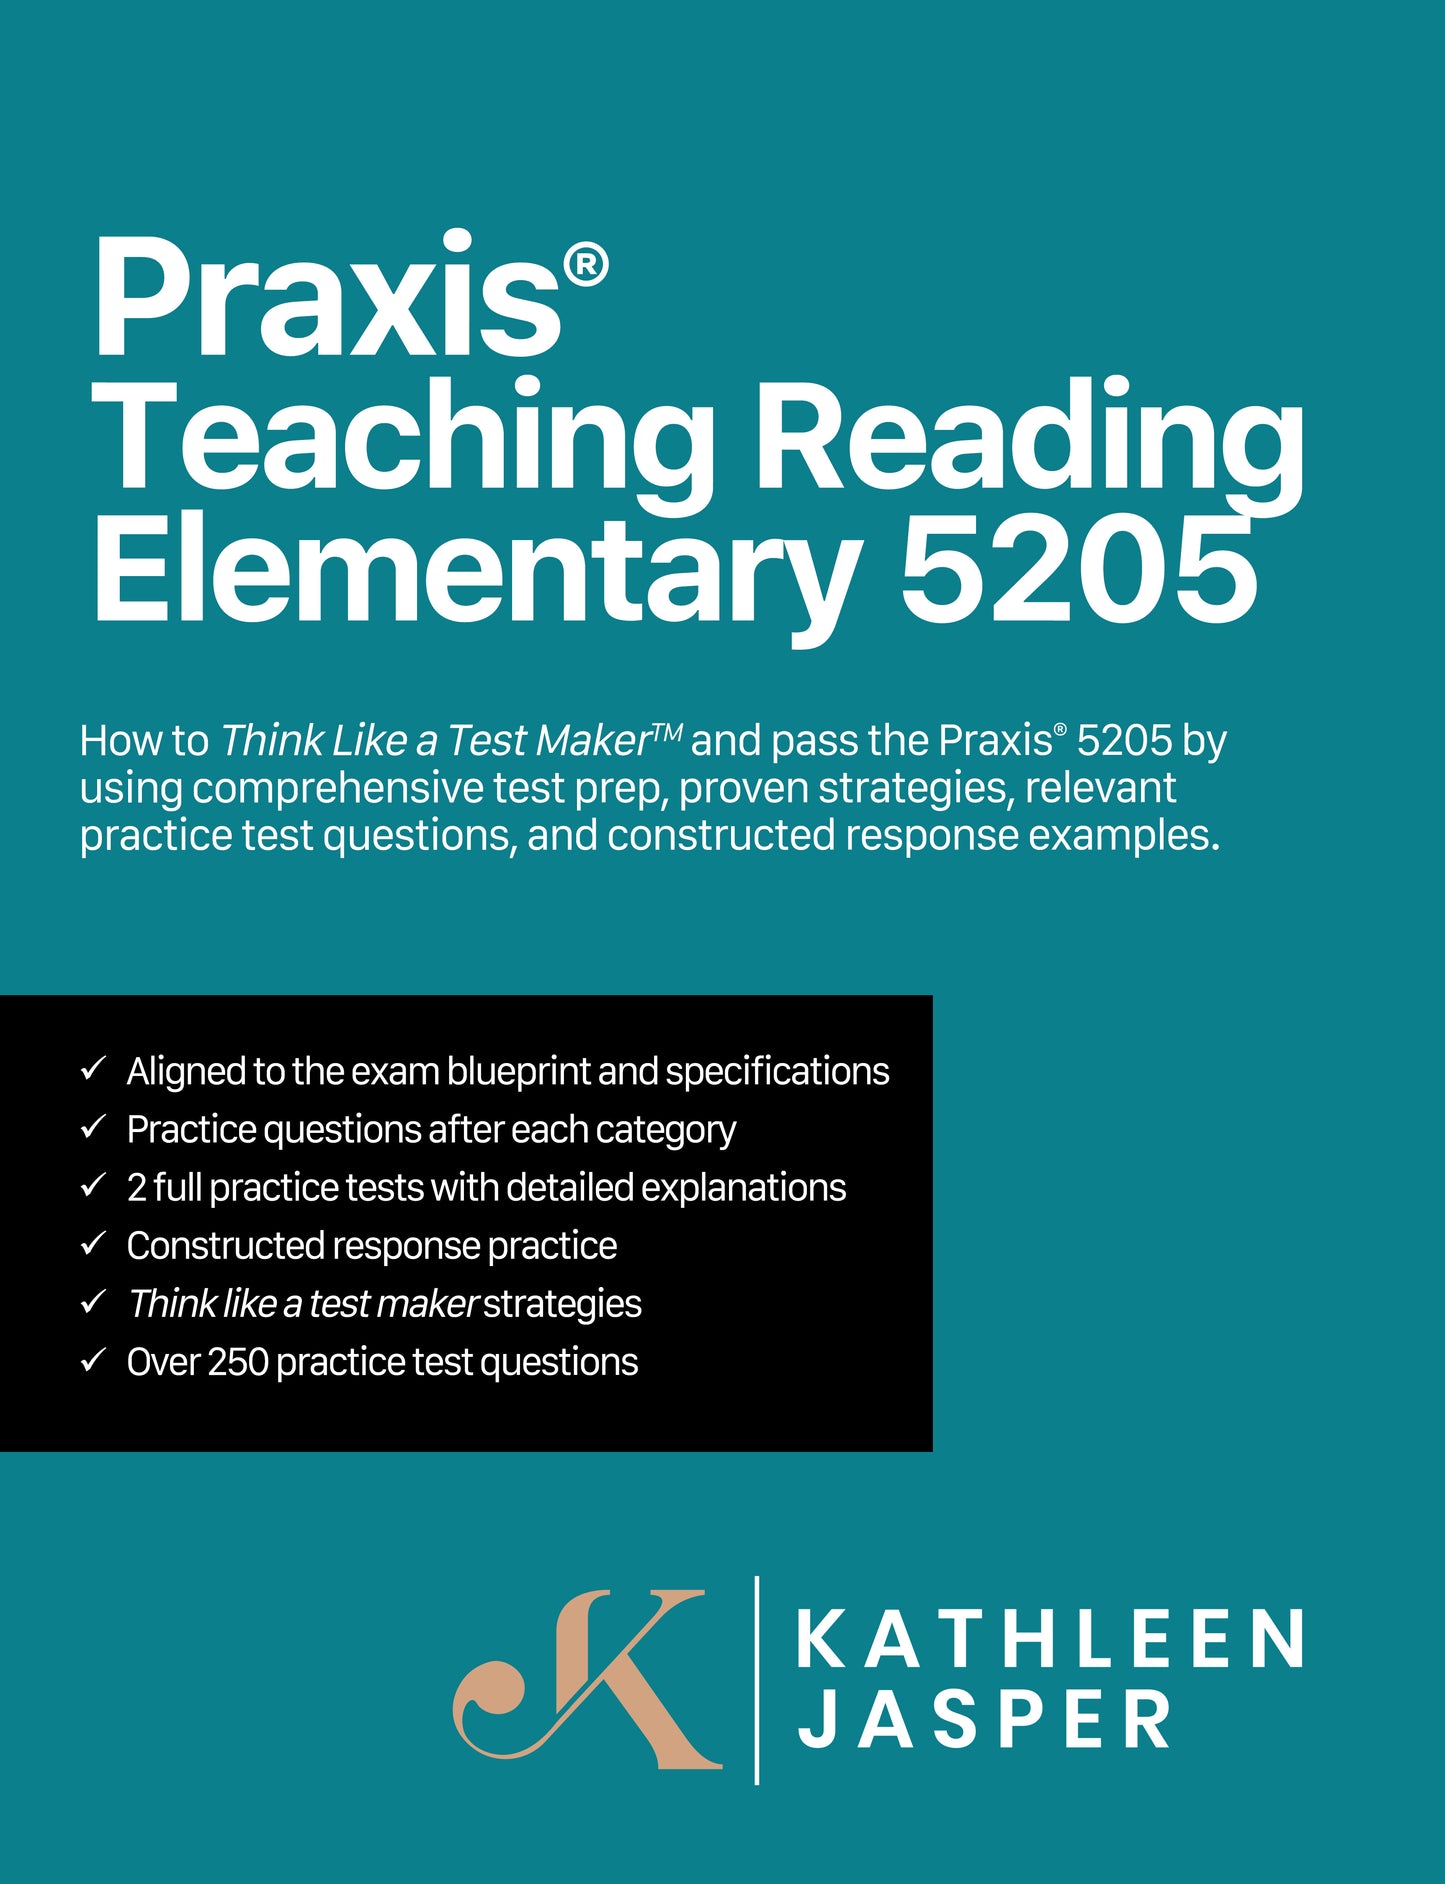 Praxis Teaching Reading 5205 - Digital Study Guide